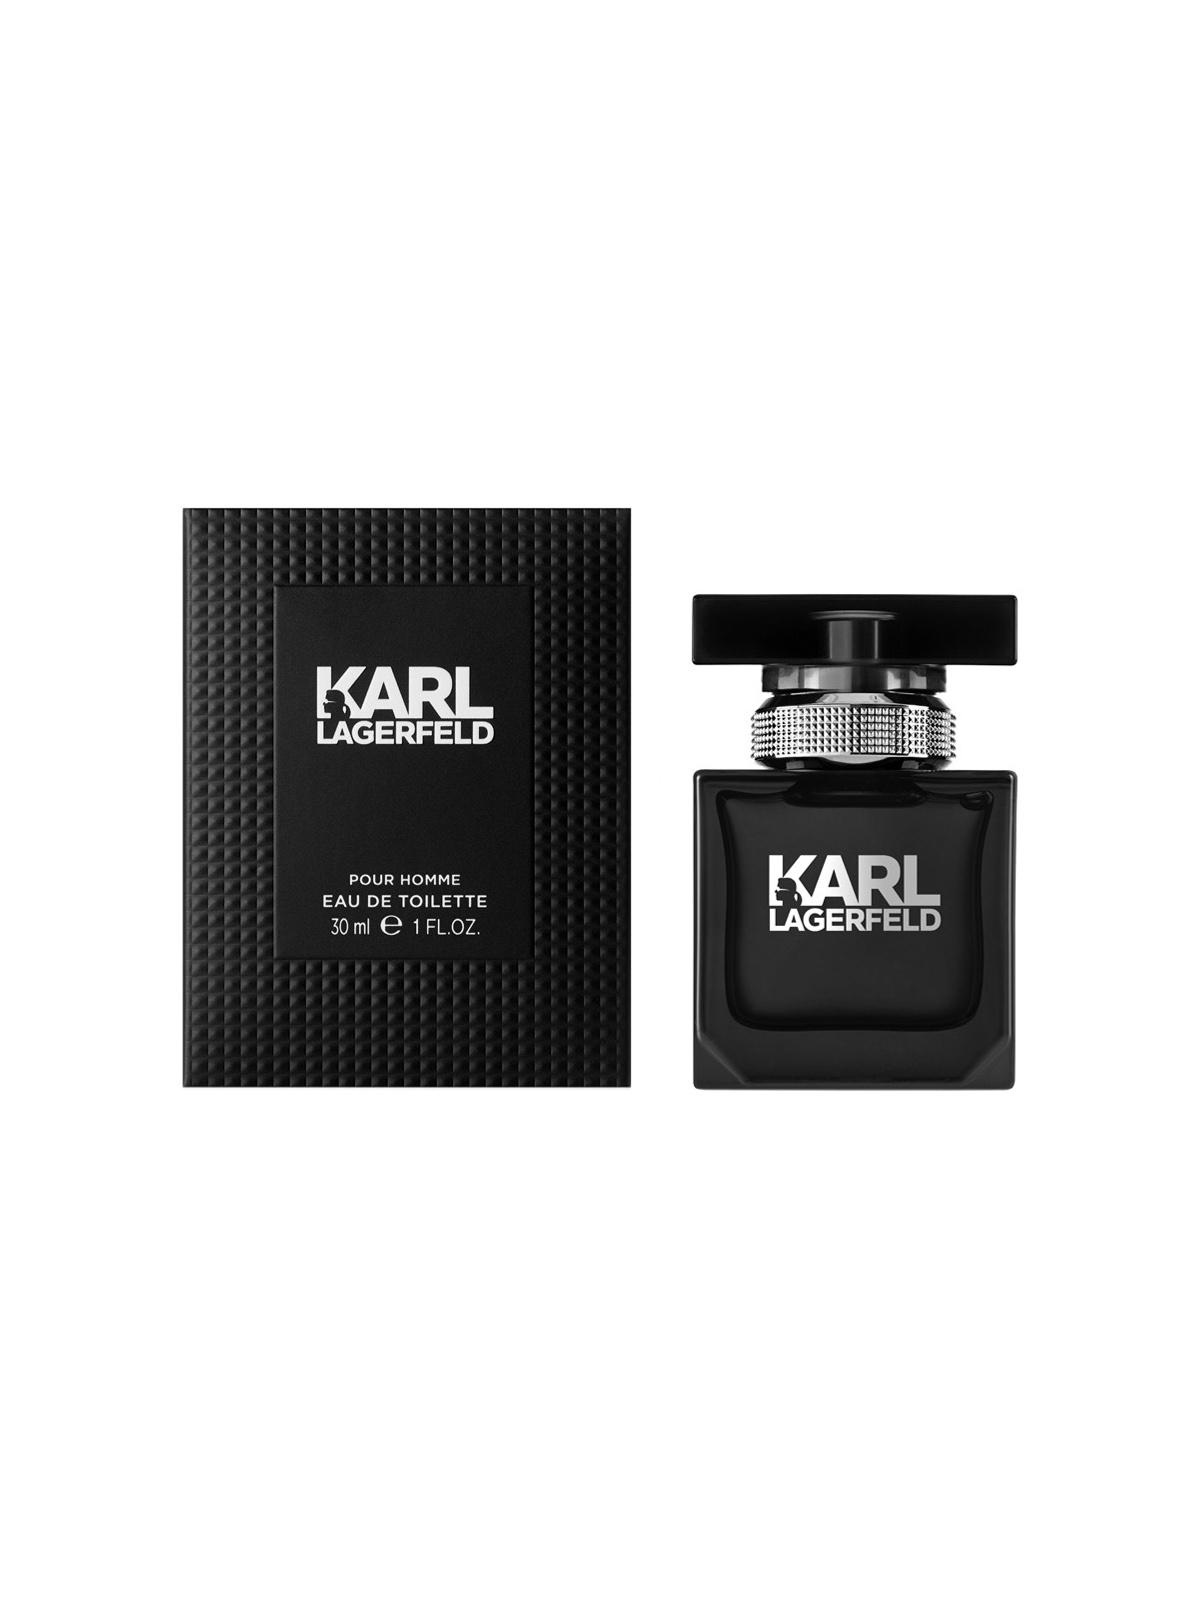 Karl Lagerfeld for Men Тоалетна вода EDT